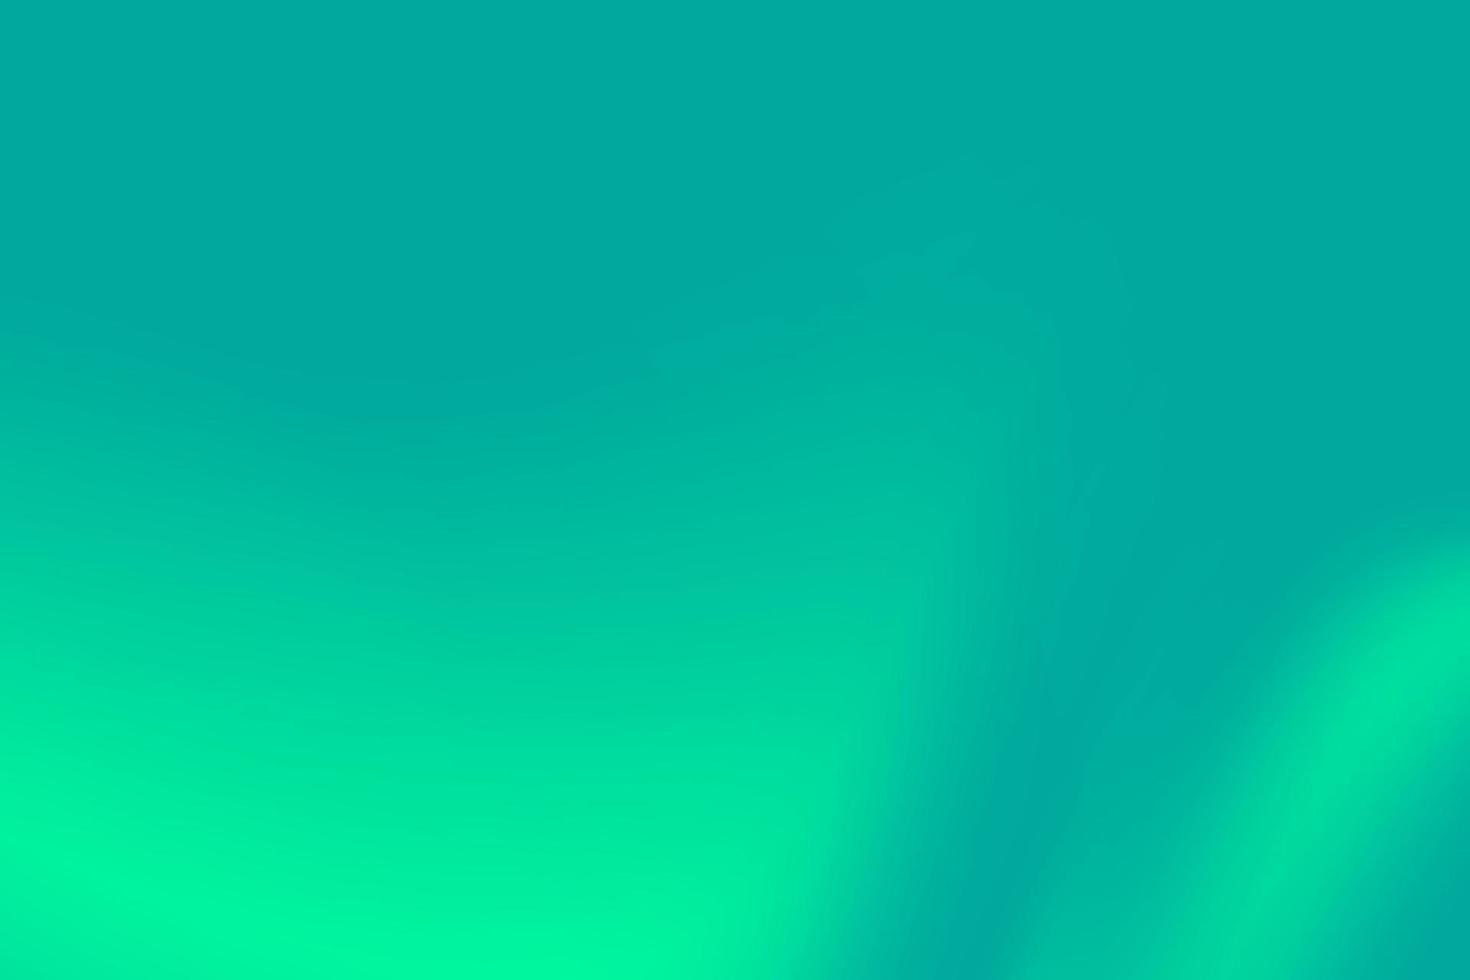 abstract glad groen Golf maas helling achtergrond ontwerp, groen achtergrond sjabloon vector